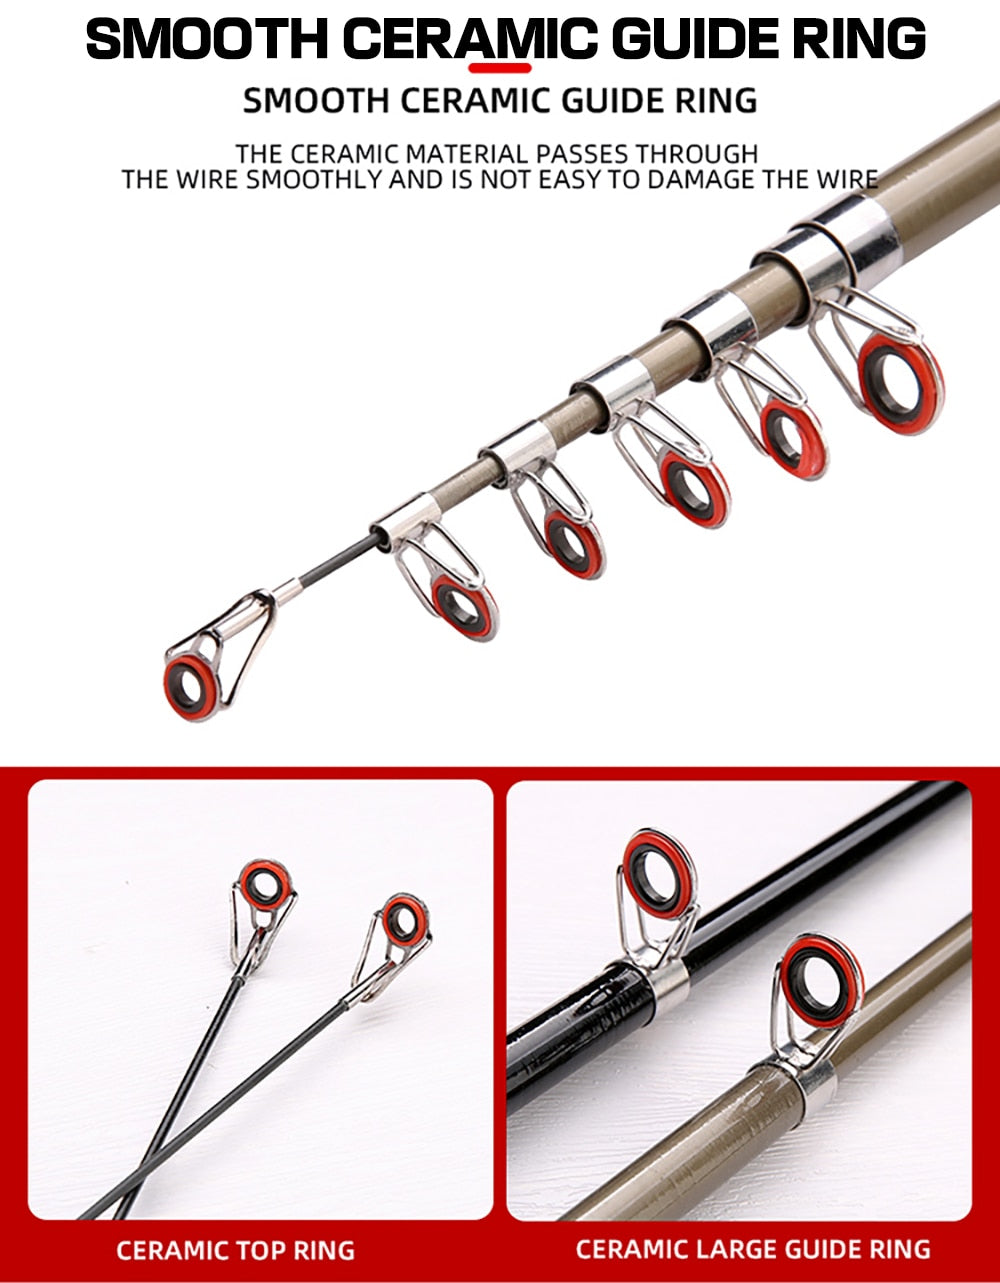 Lure Fishing Rod 1.3m 1.6m 1.8m Carbon Spinning Casting Baitcasting Mini Short Light Travel Lure Rod